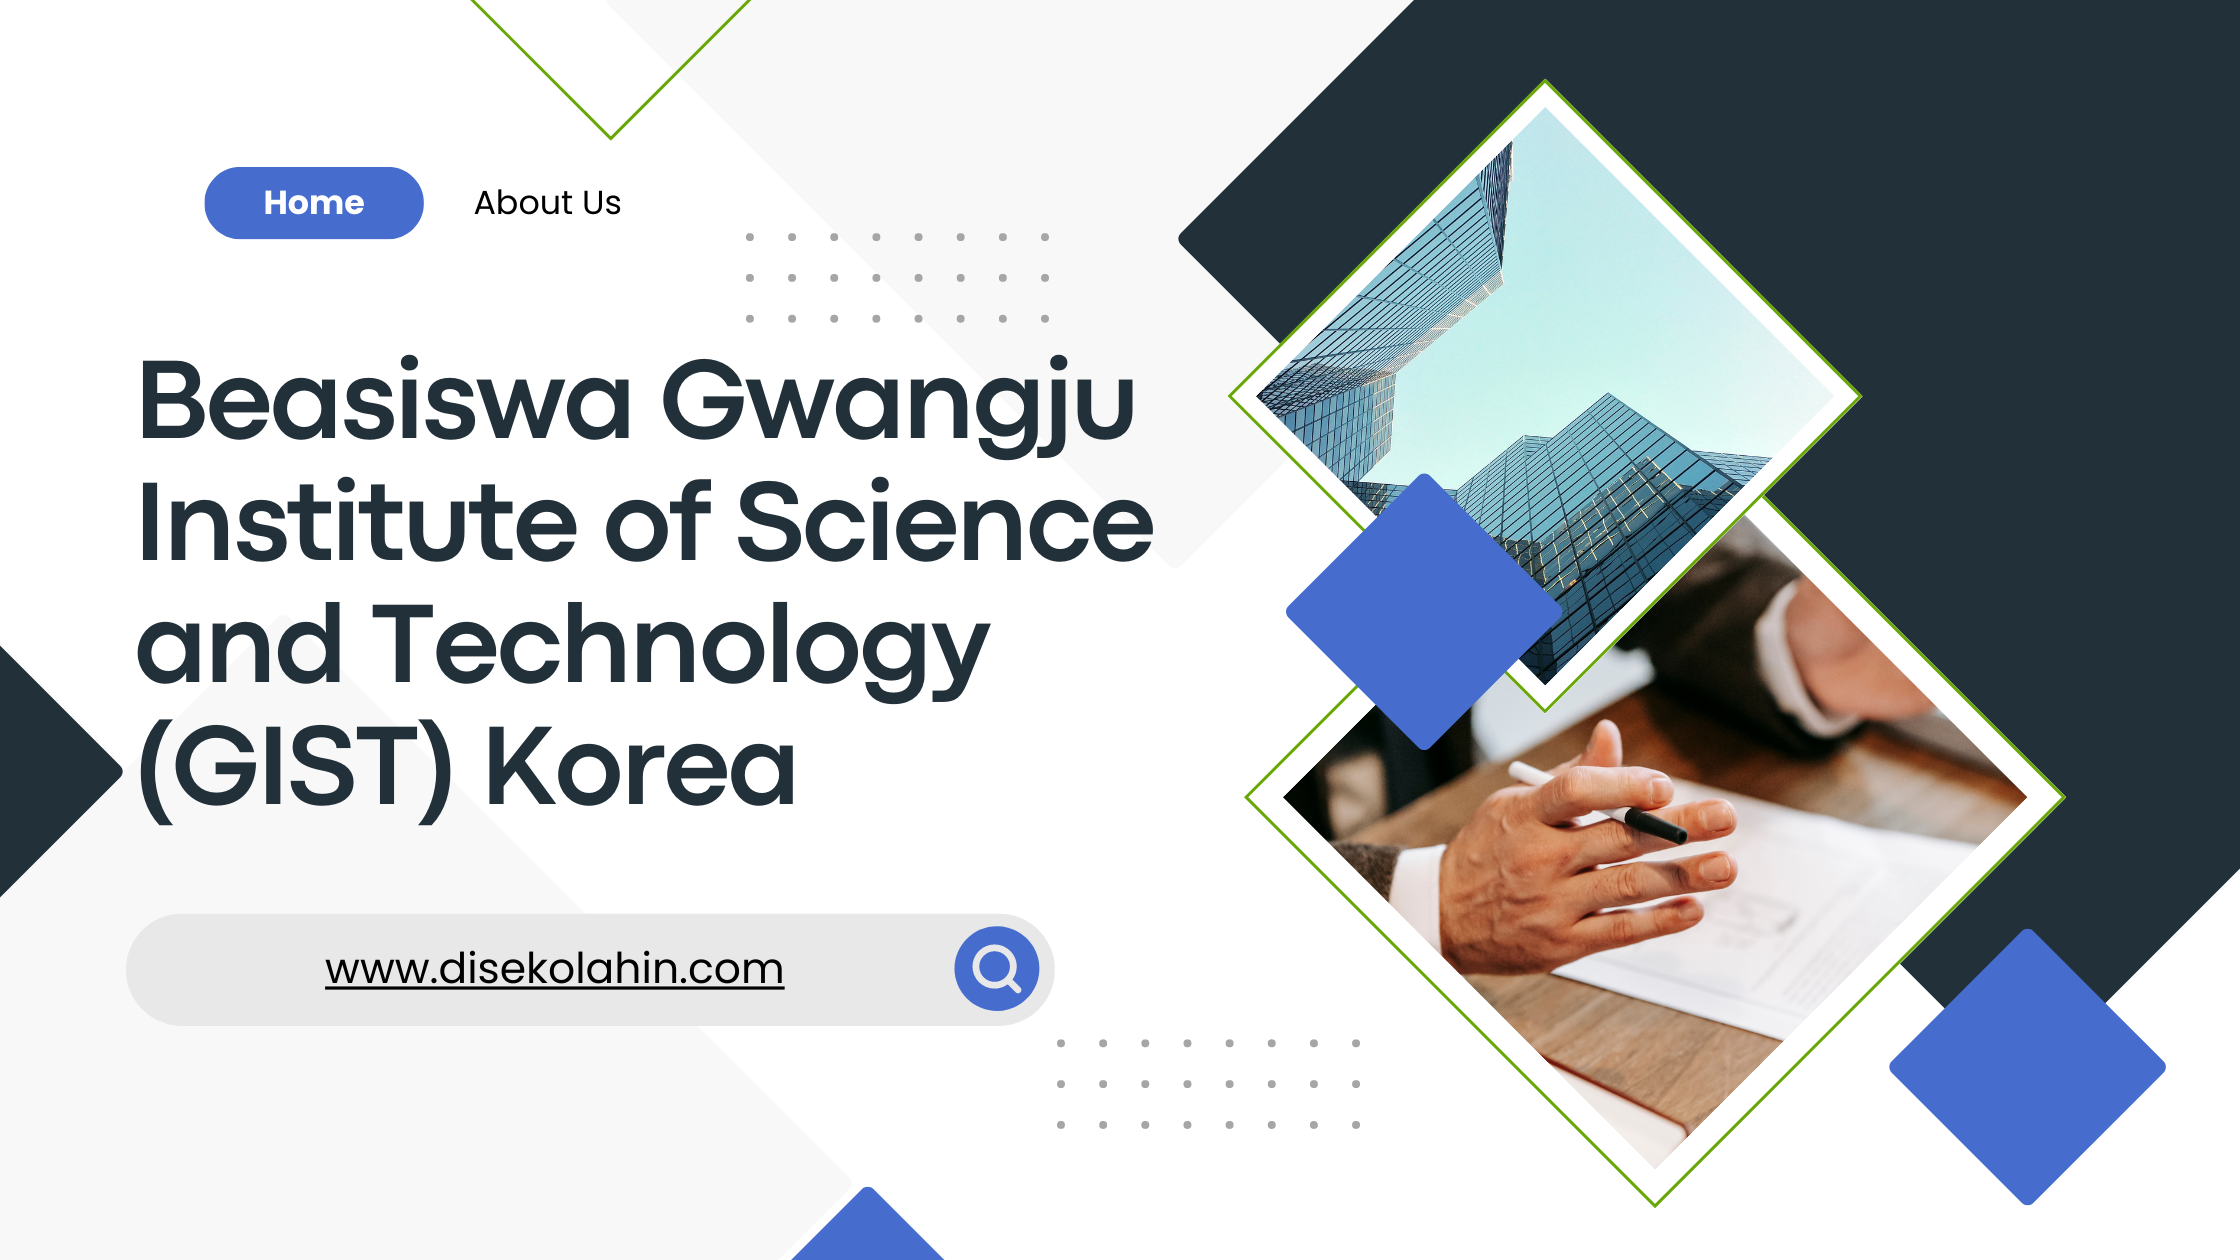 Panduan Lengkap Beasiswa Gwangju Institute of Science and Technology (GIST) Korea Untuk S2 dan S3